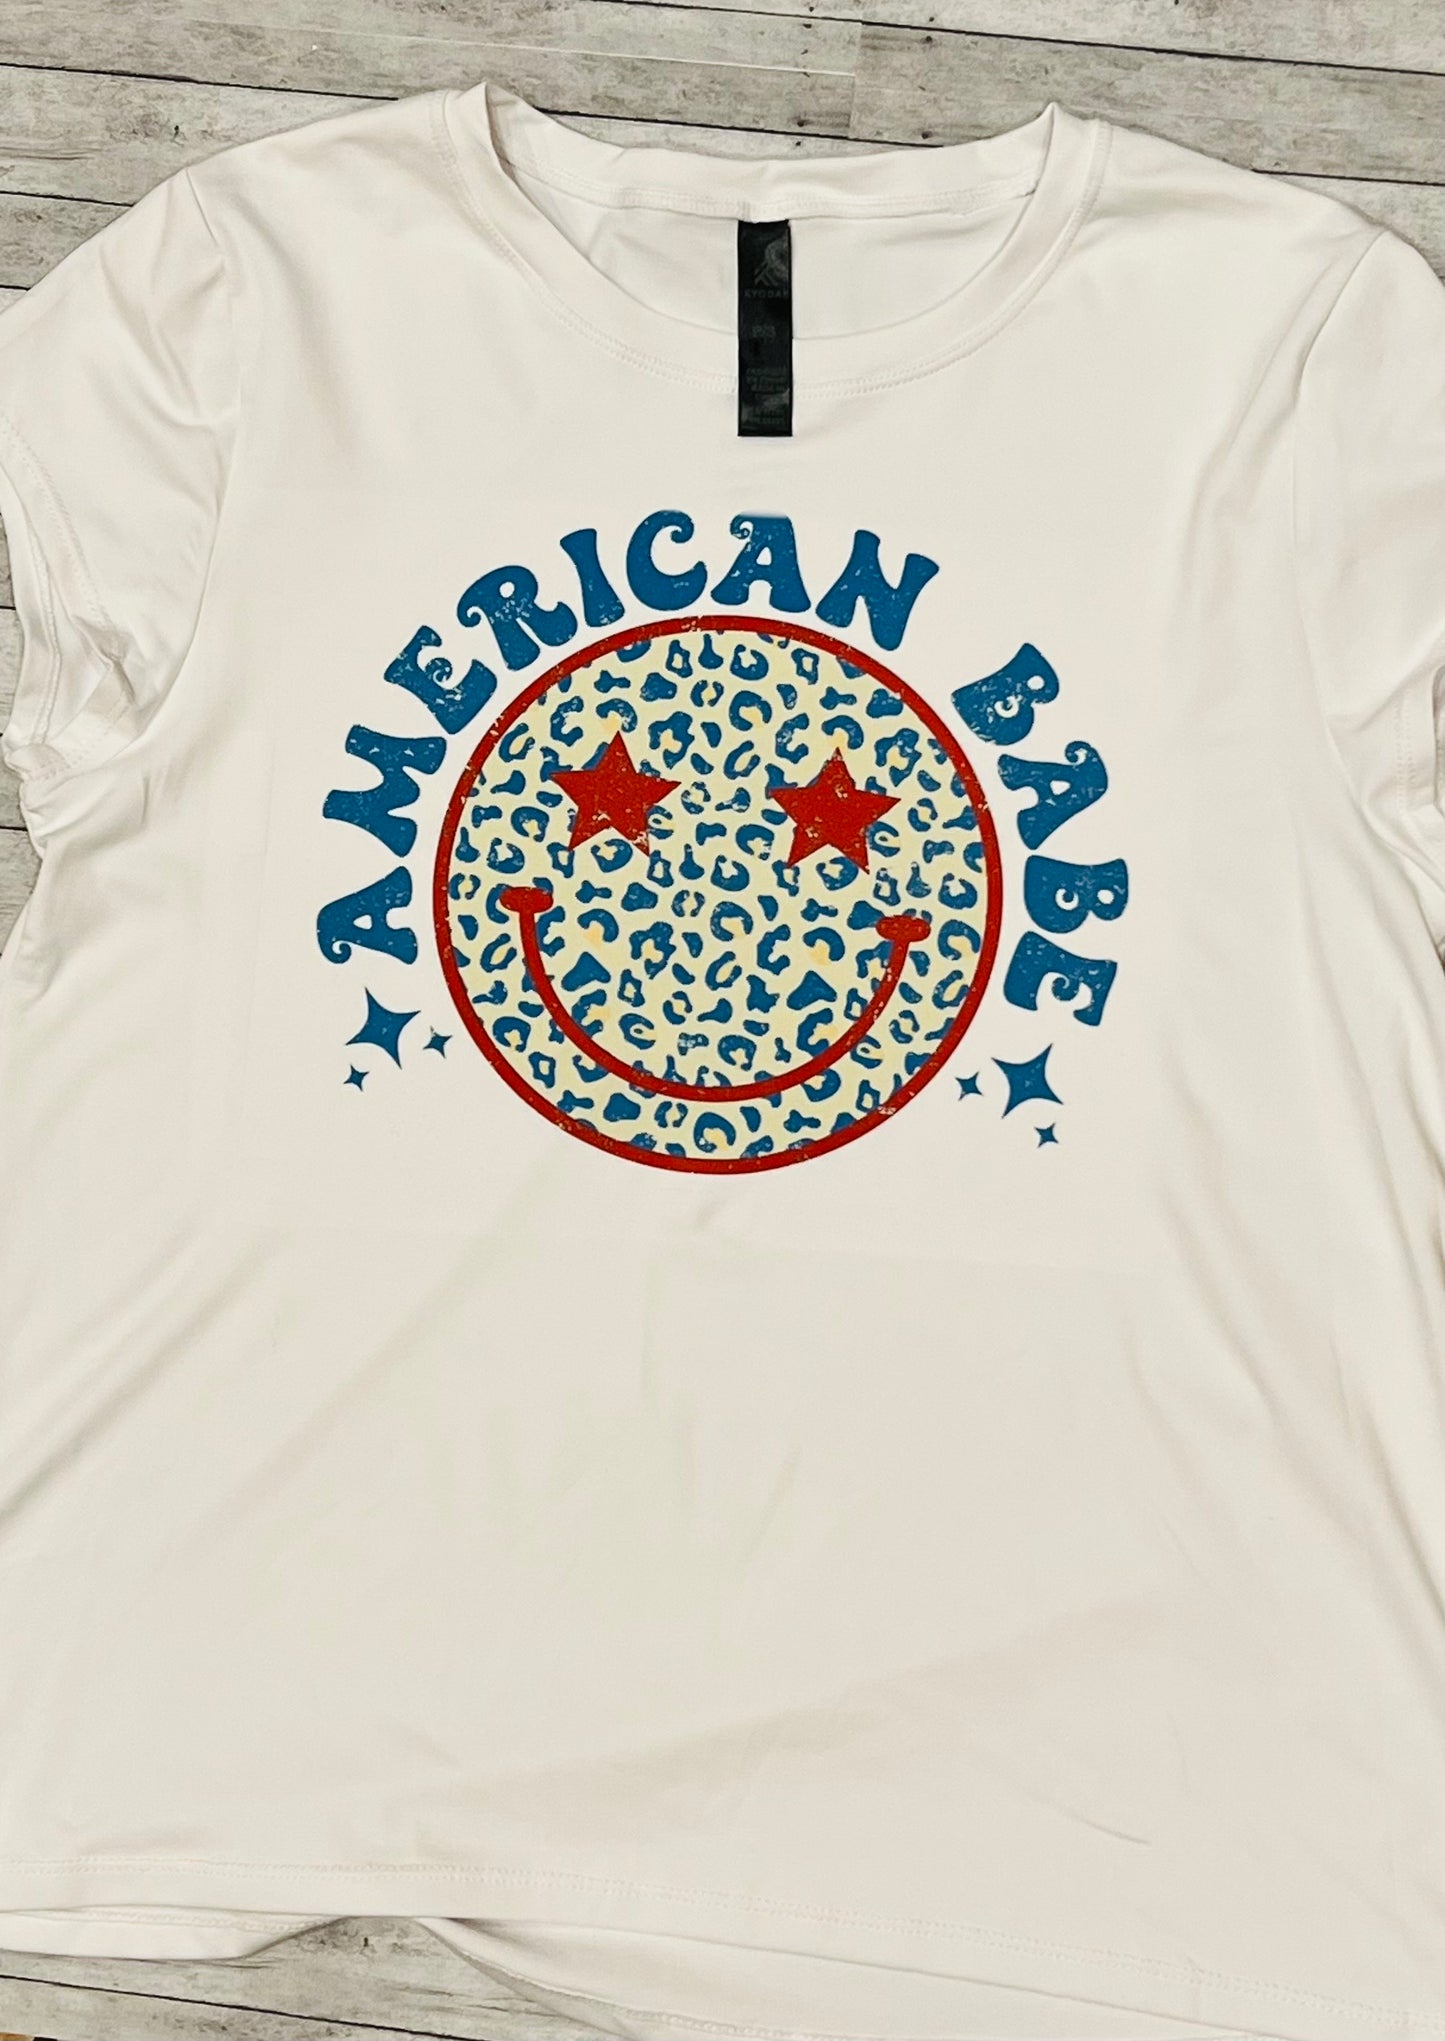 The shine creation- American babe shirt